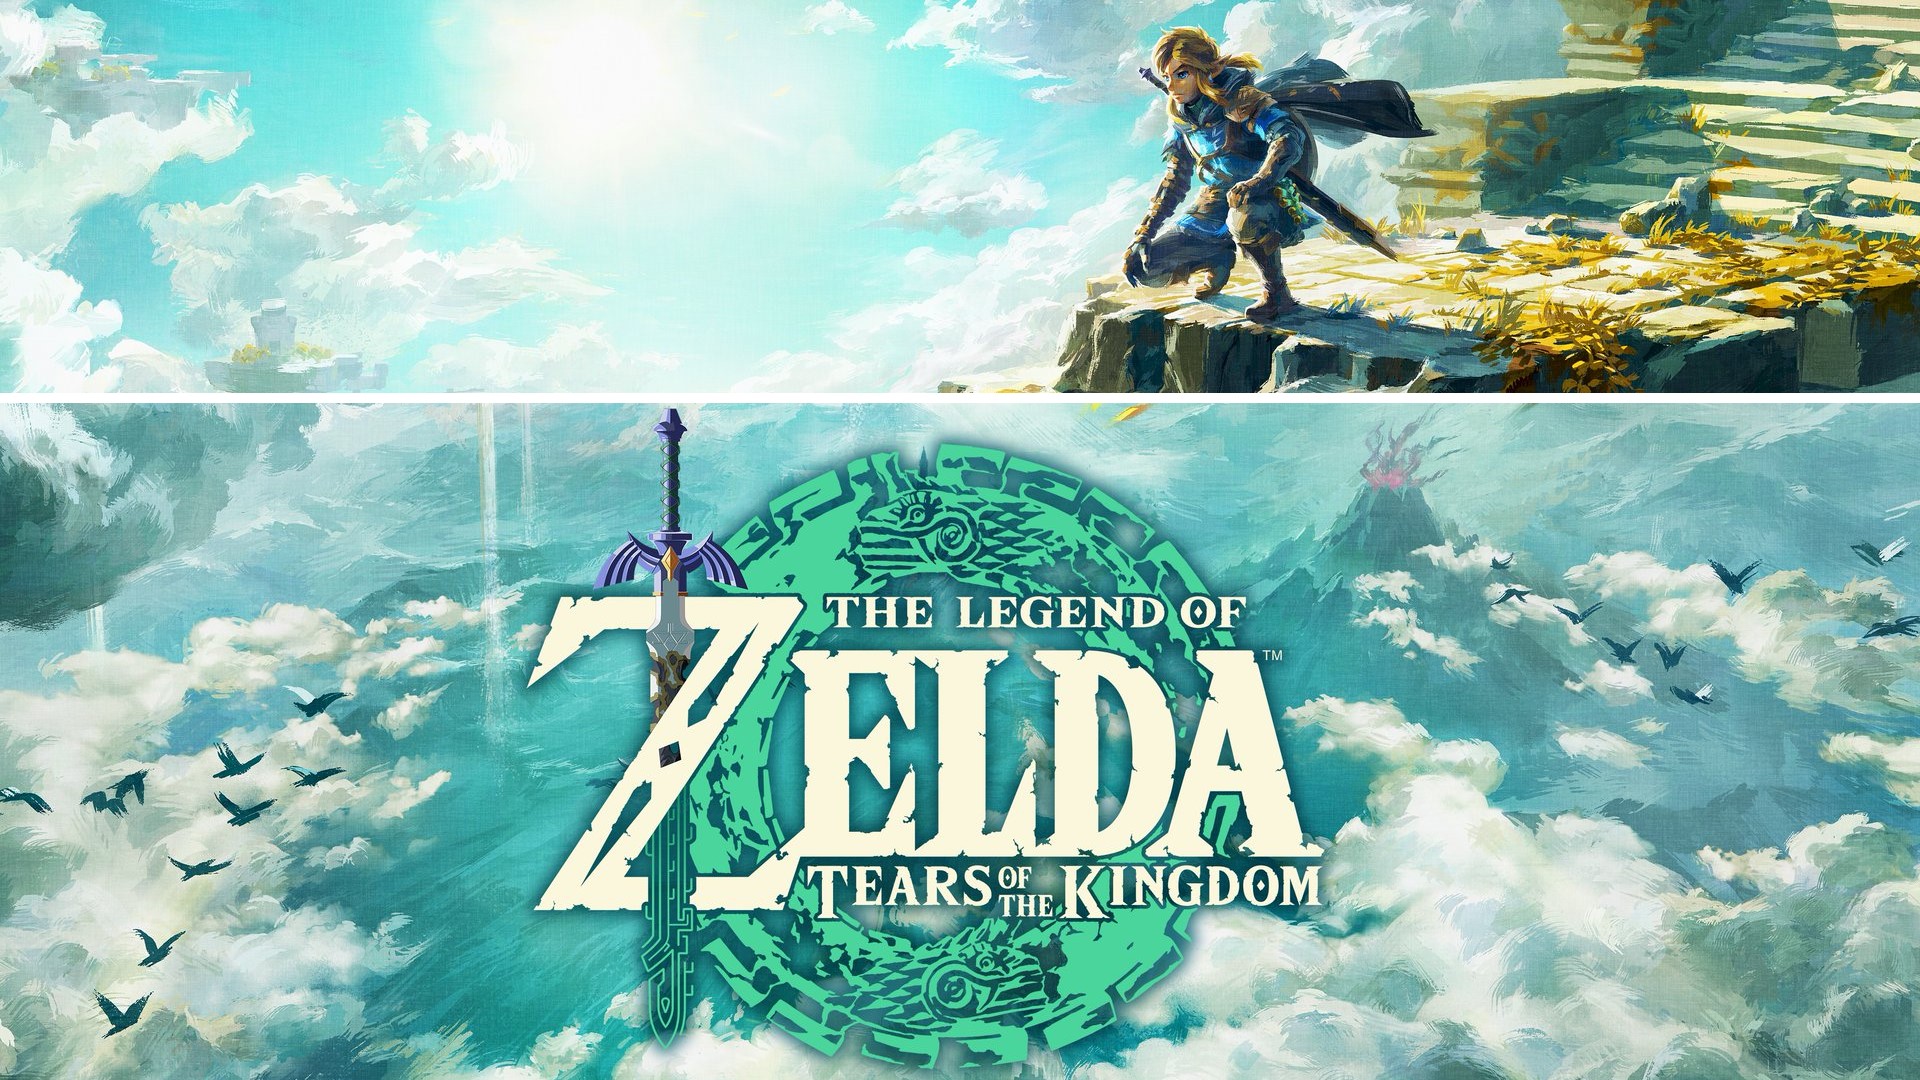  The Legend Of Zelda: Tears Of The Kingdom pre-order